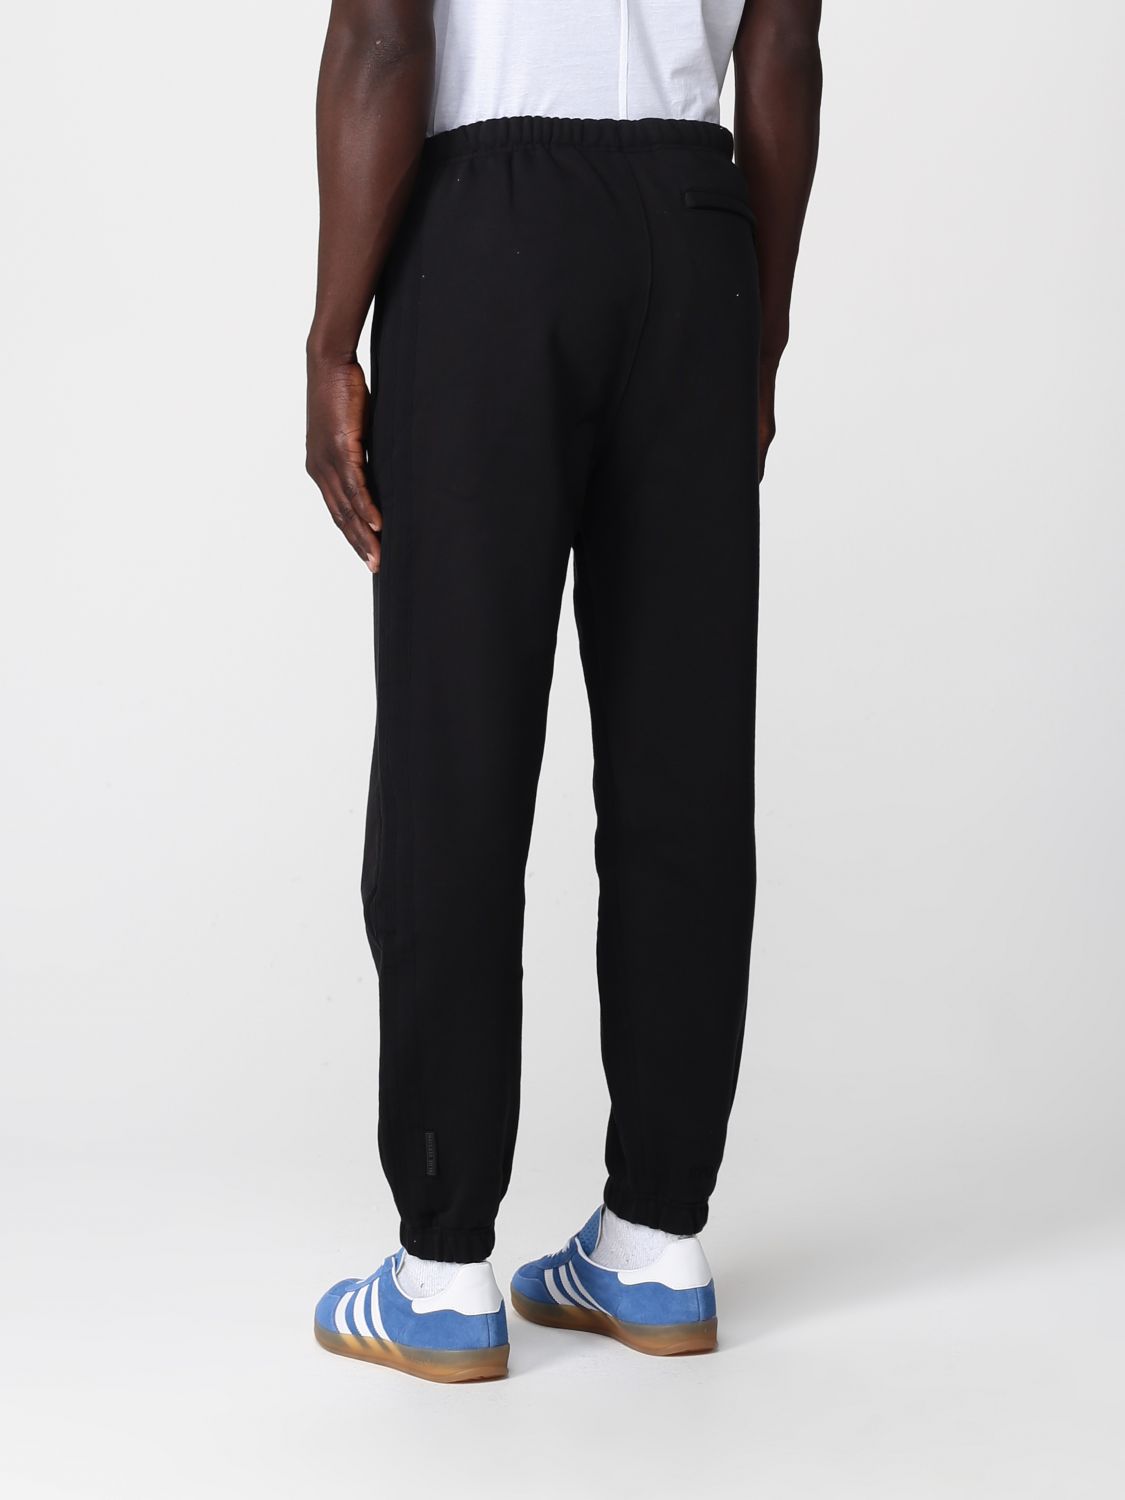 ADIDAS ORIGINALS: pants for - Black | Adidas Originals on GIGLIO.COM